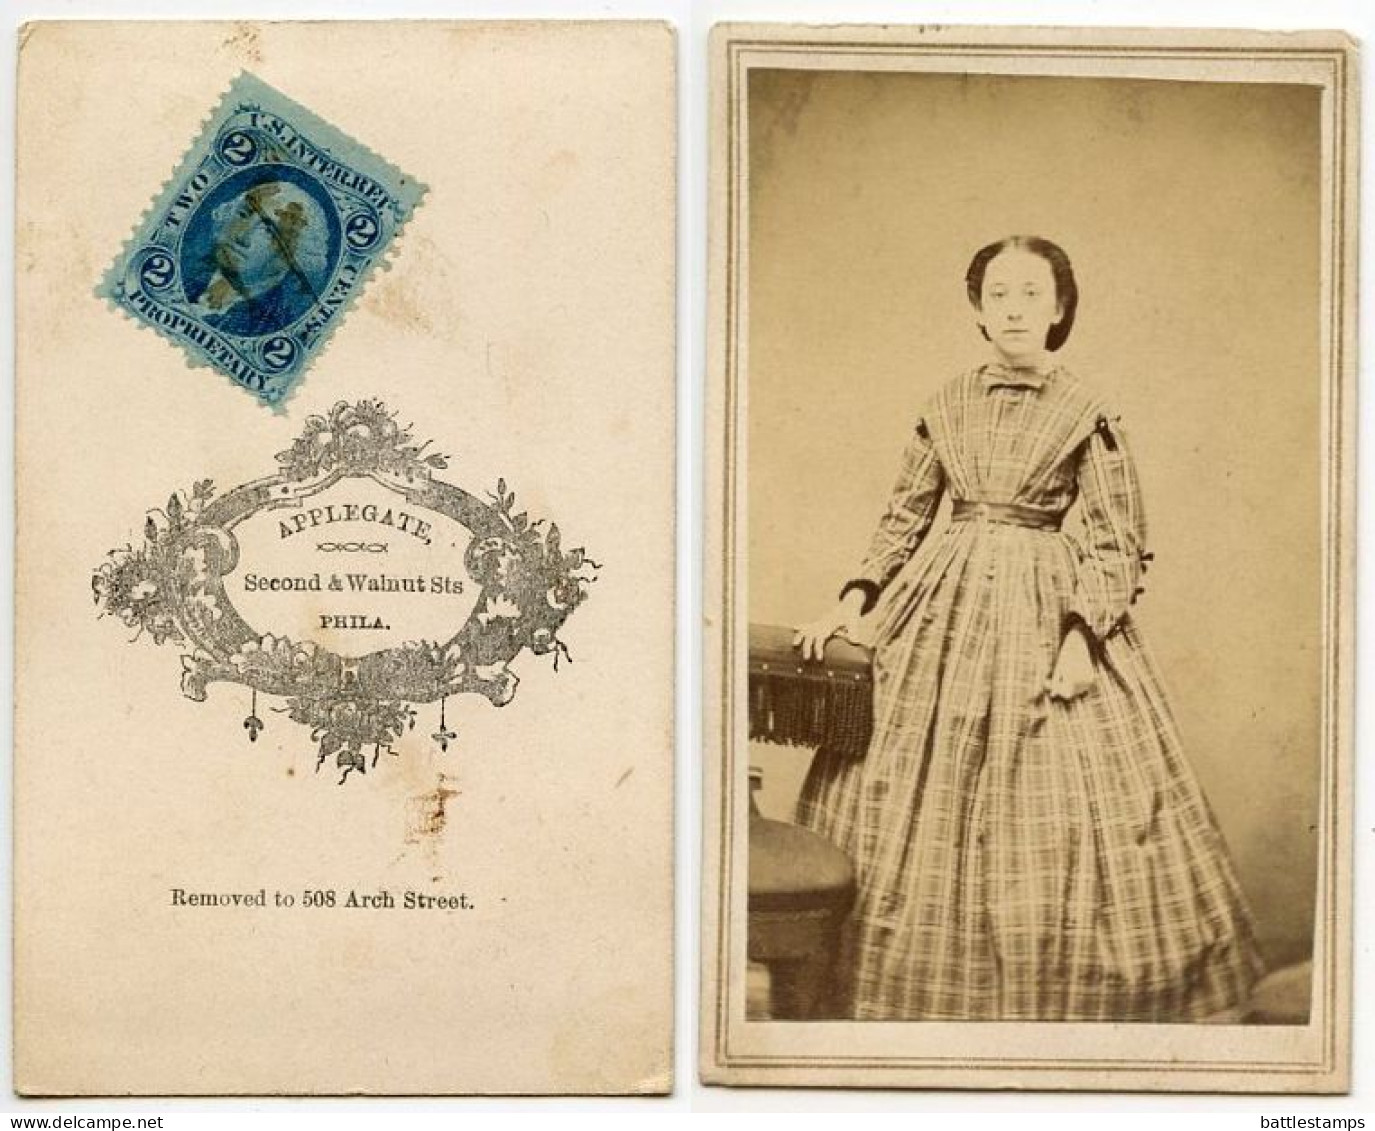 United States 1860‘s Photograph, Woman - Applegate, Philadelphia Pennsylvania - Scott R13c Revenue Stamp - Fiscali